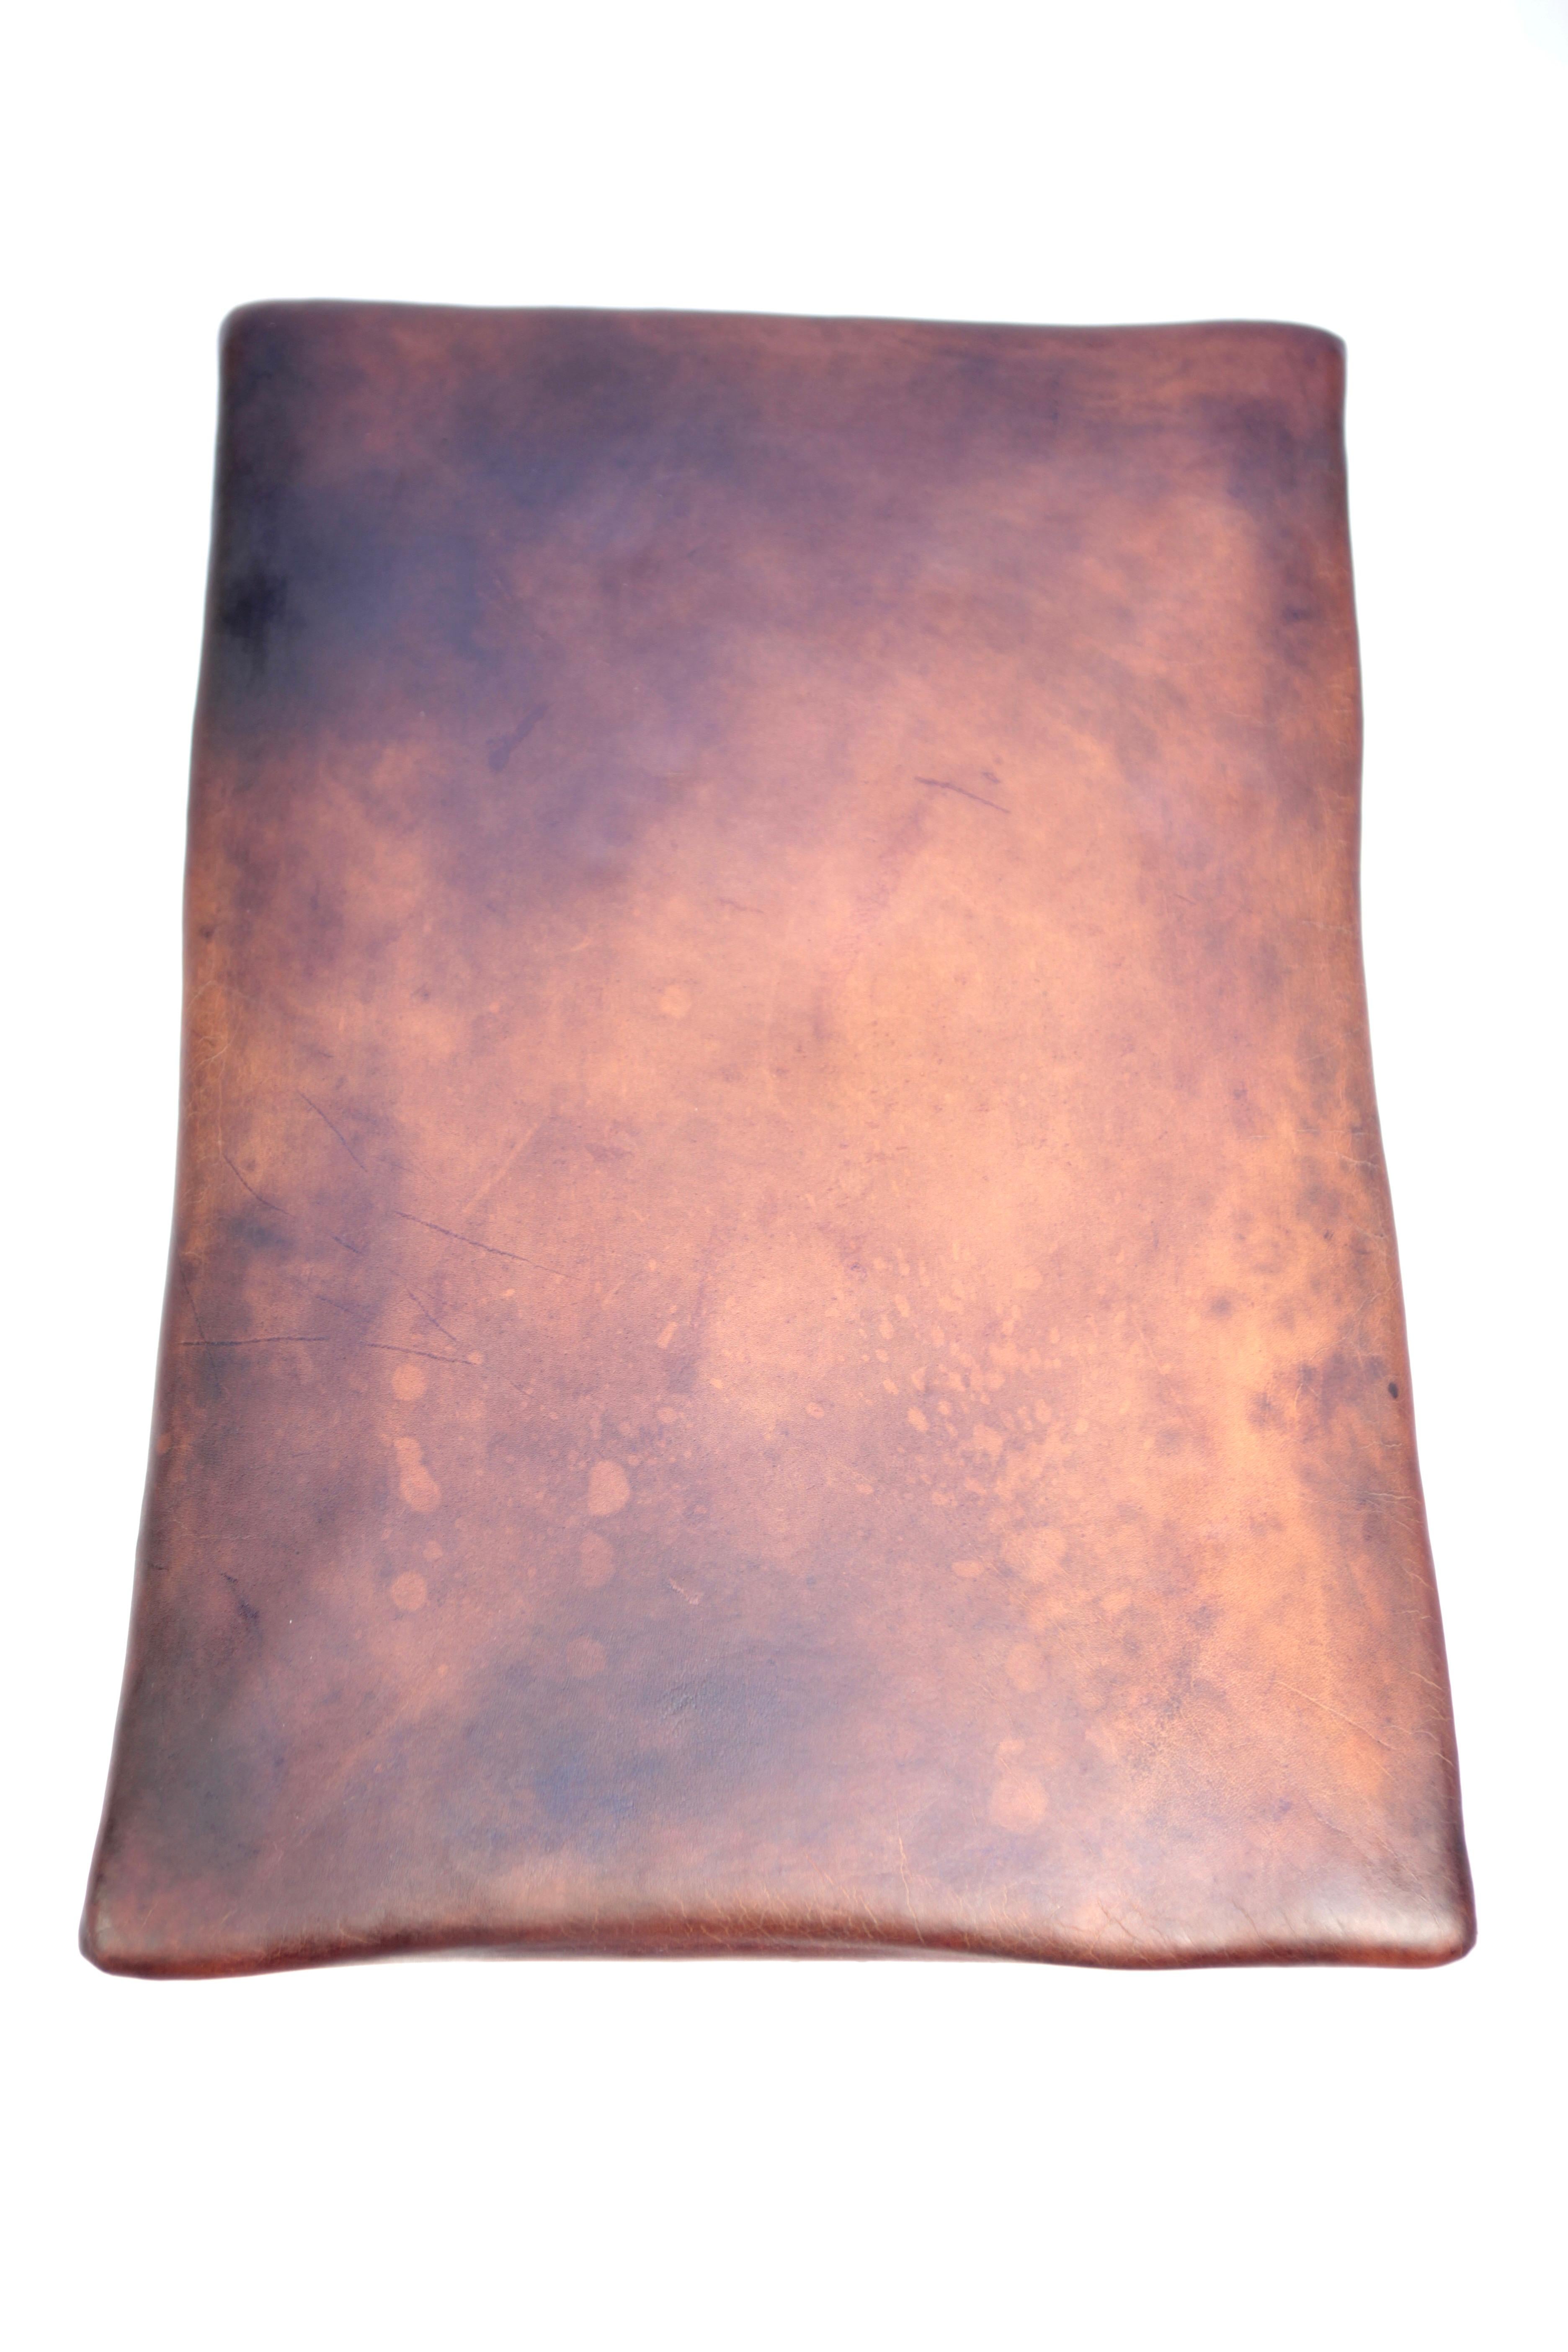 Kaare Klint, Rare Tabouret in Cuban Mahogany & Niger Leather, Model 3758 1